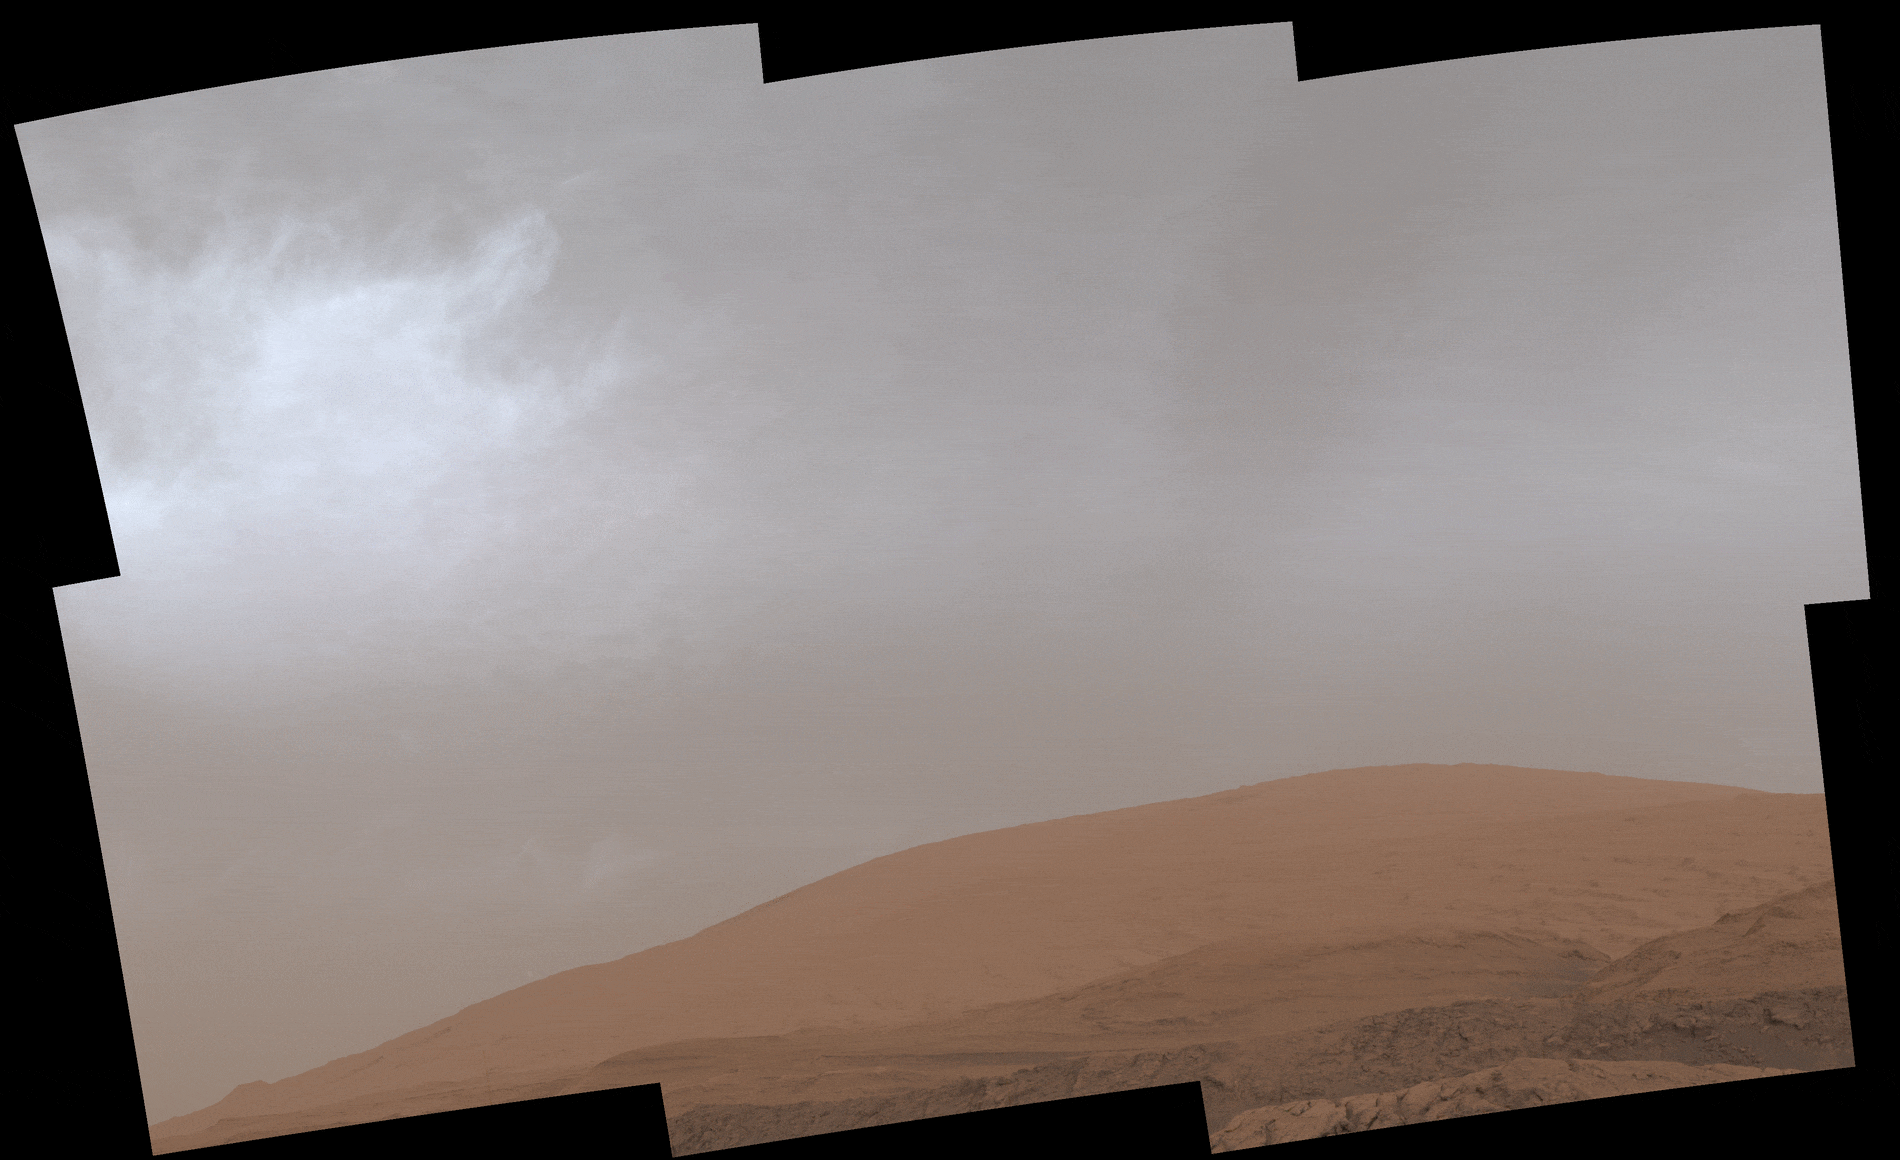 Drifting Clouds Over Mars' Mount Sharp